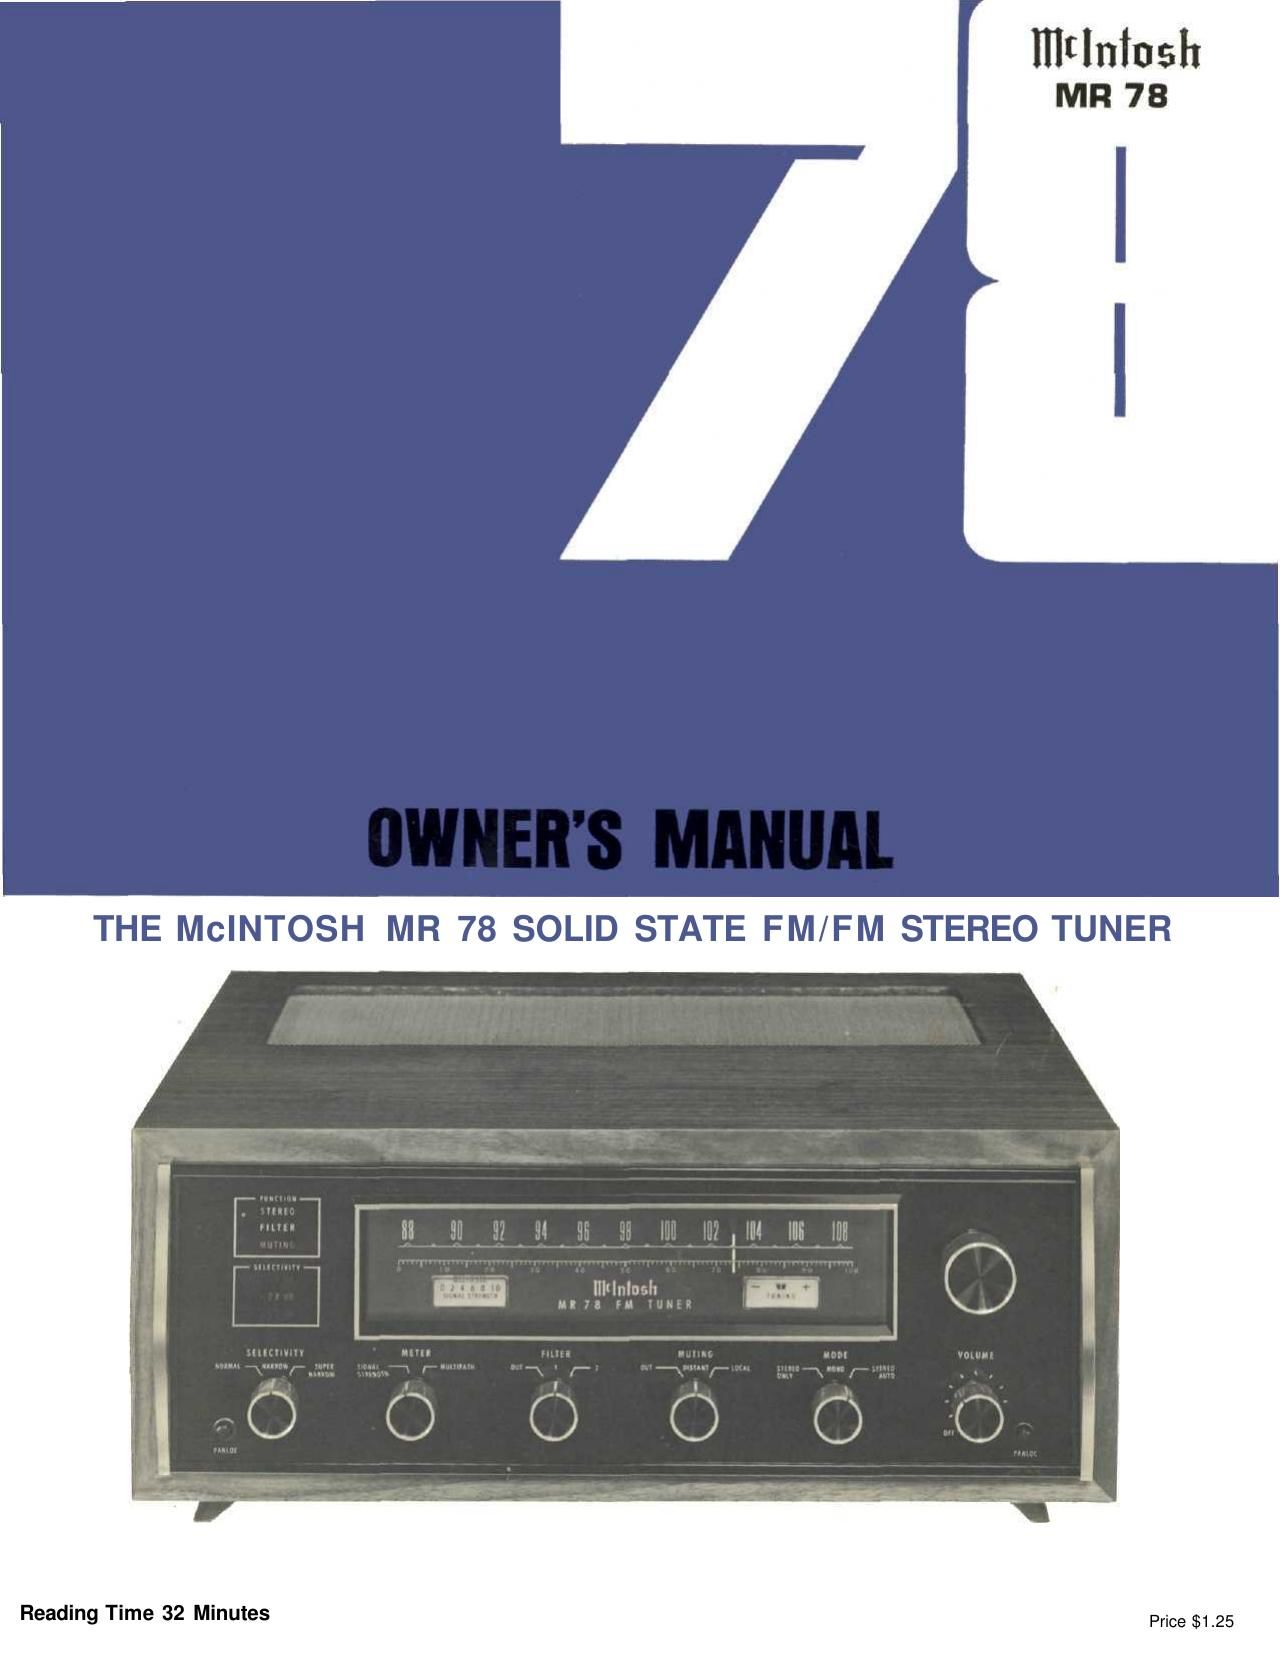 McIntosh MR 78 Owners Manual